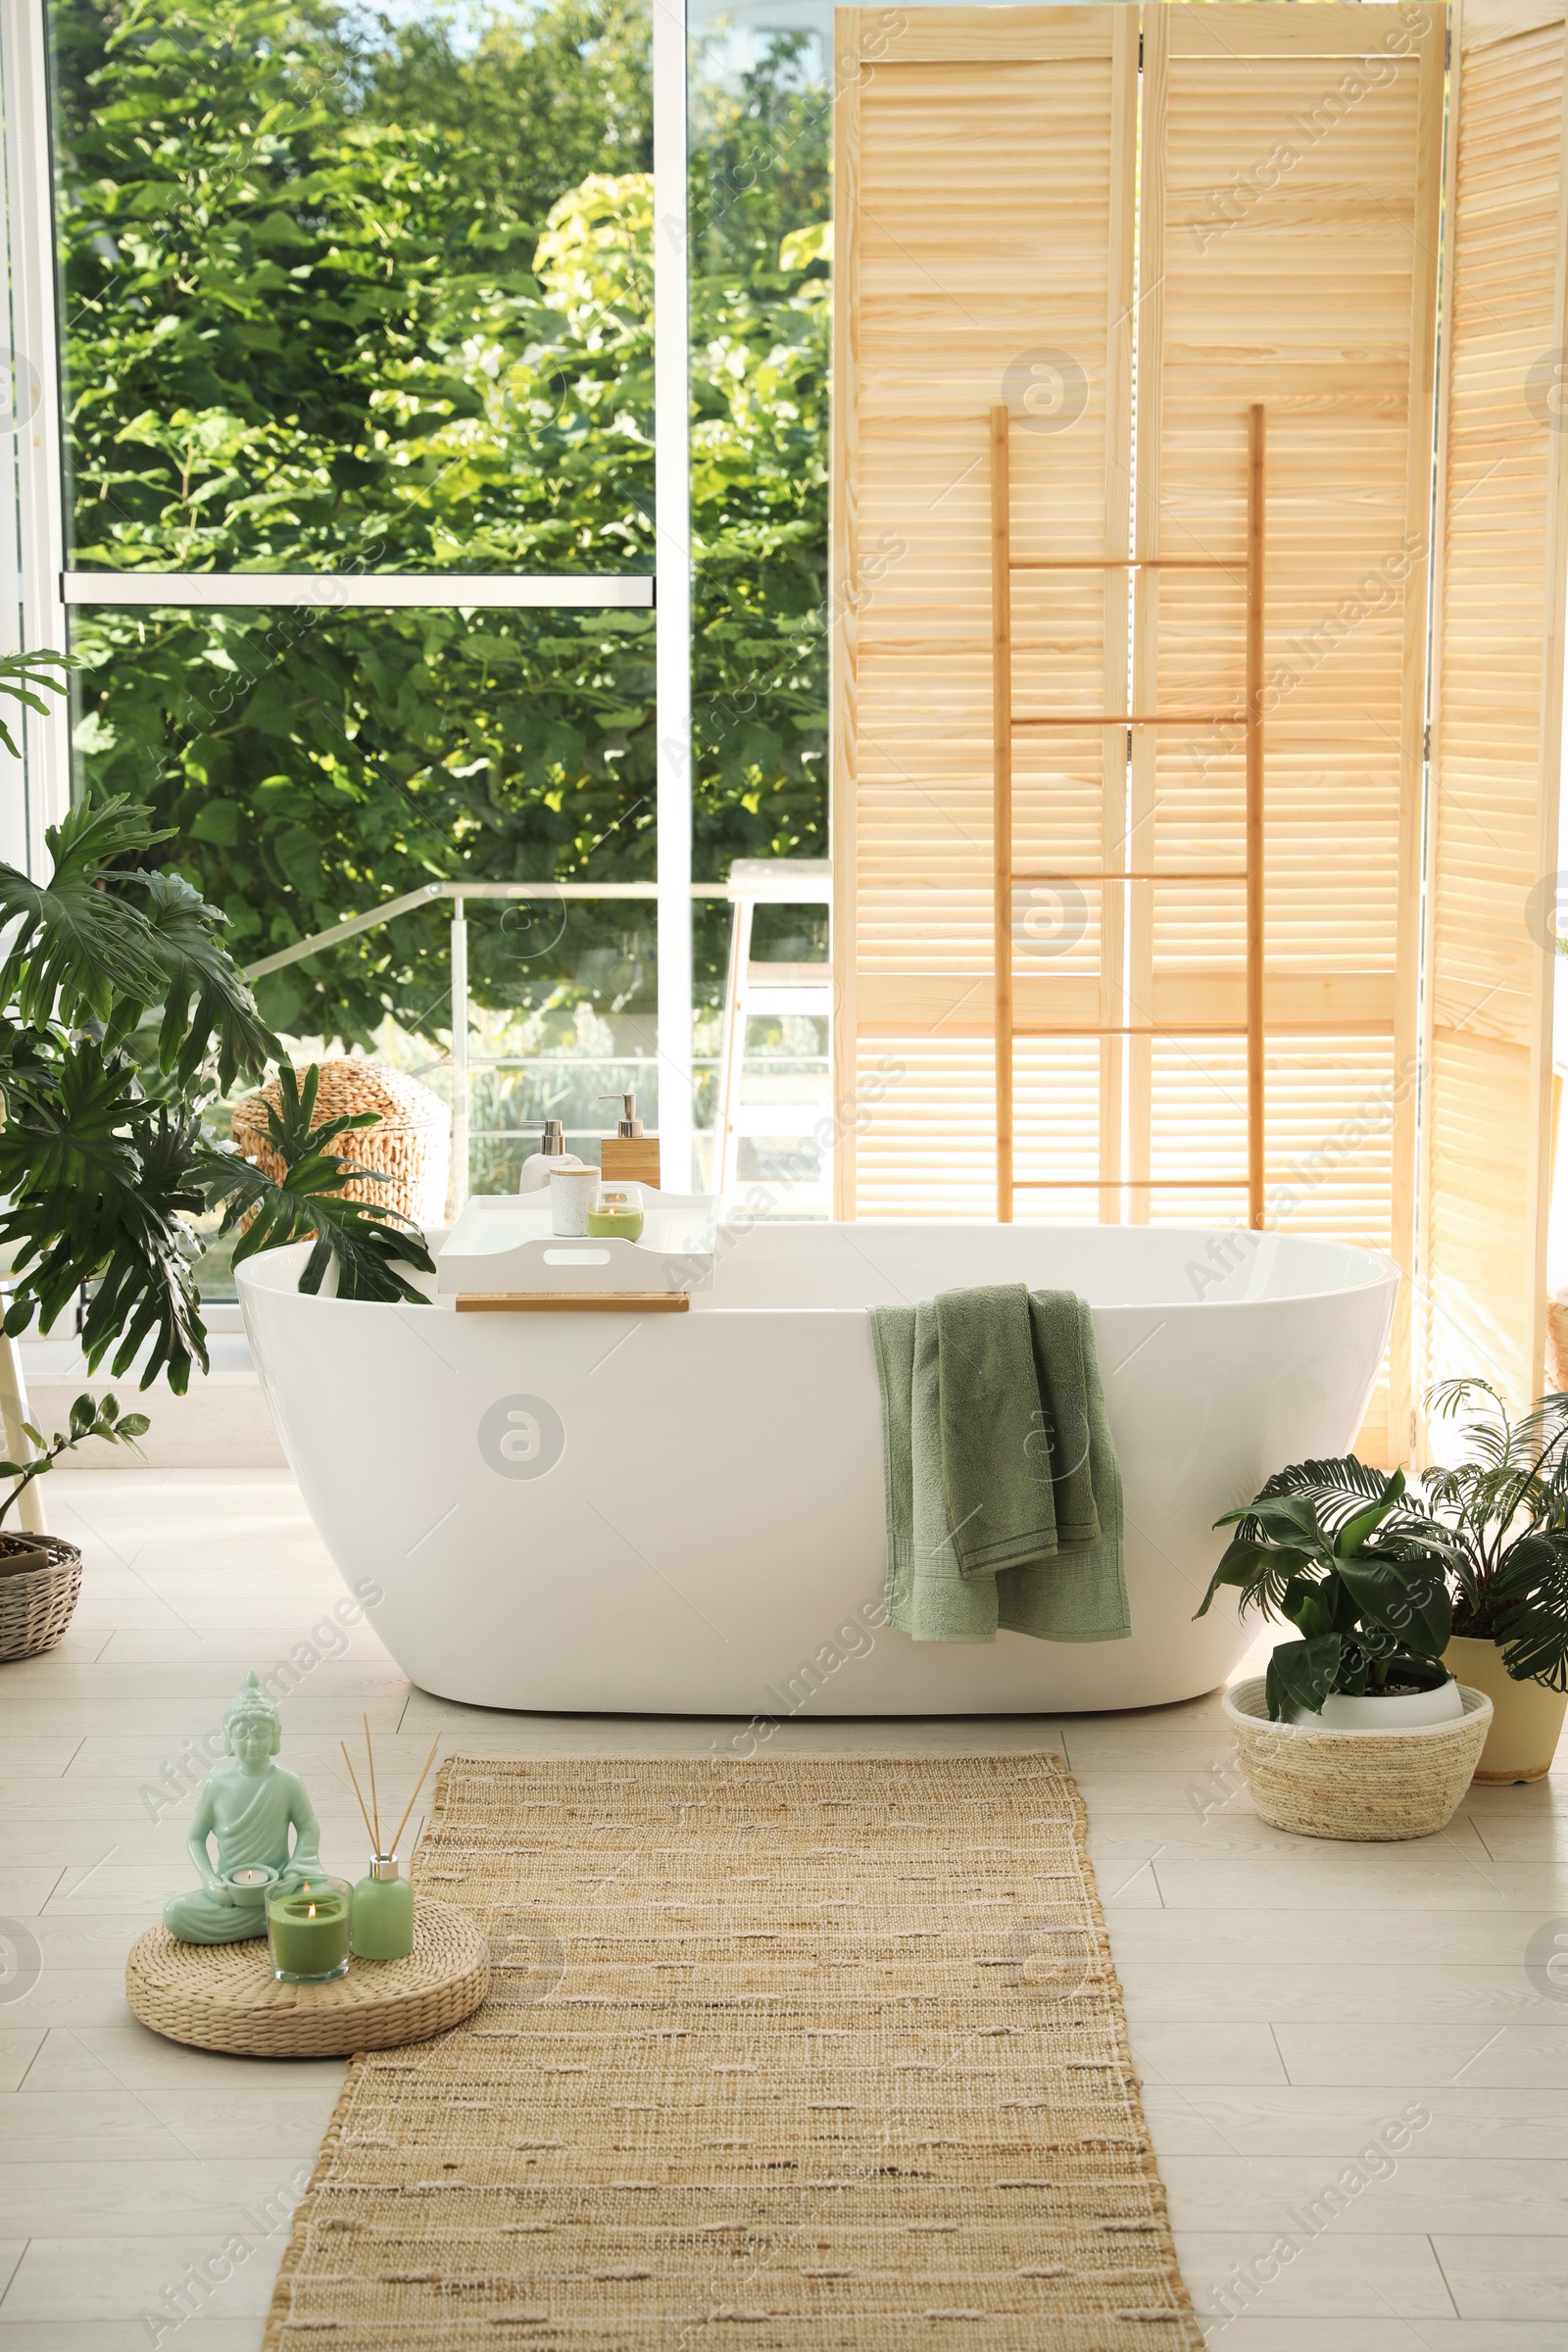 Photo of Stylish bathroom interior with modern tub and beautiful houseplants